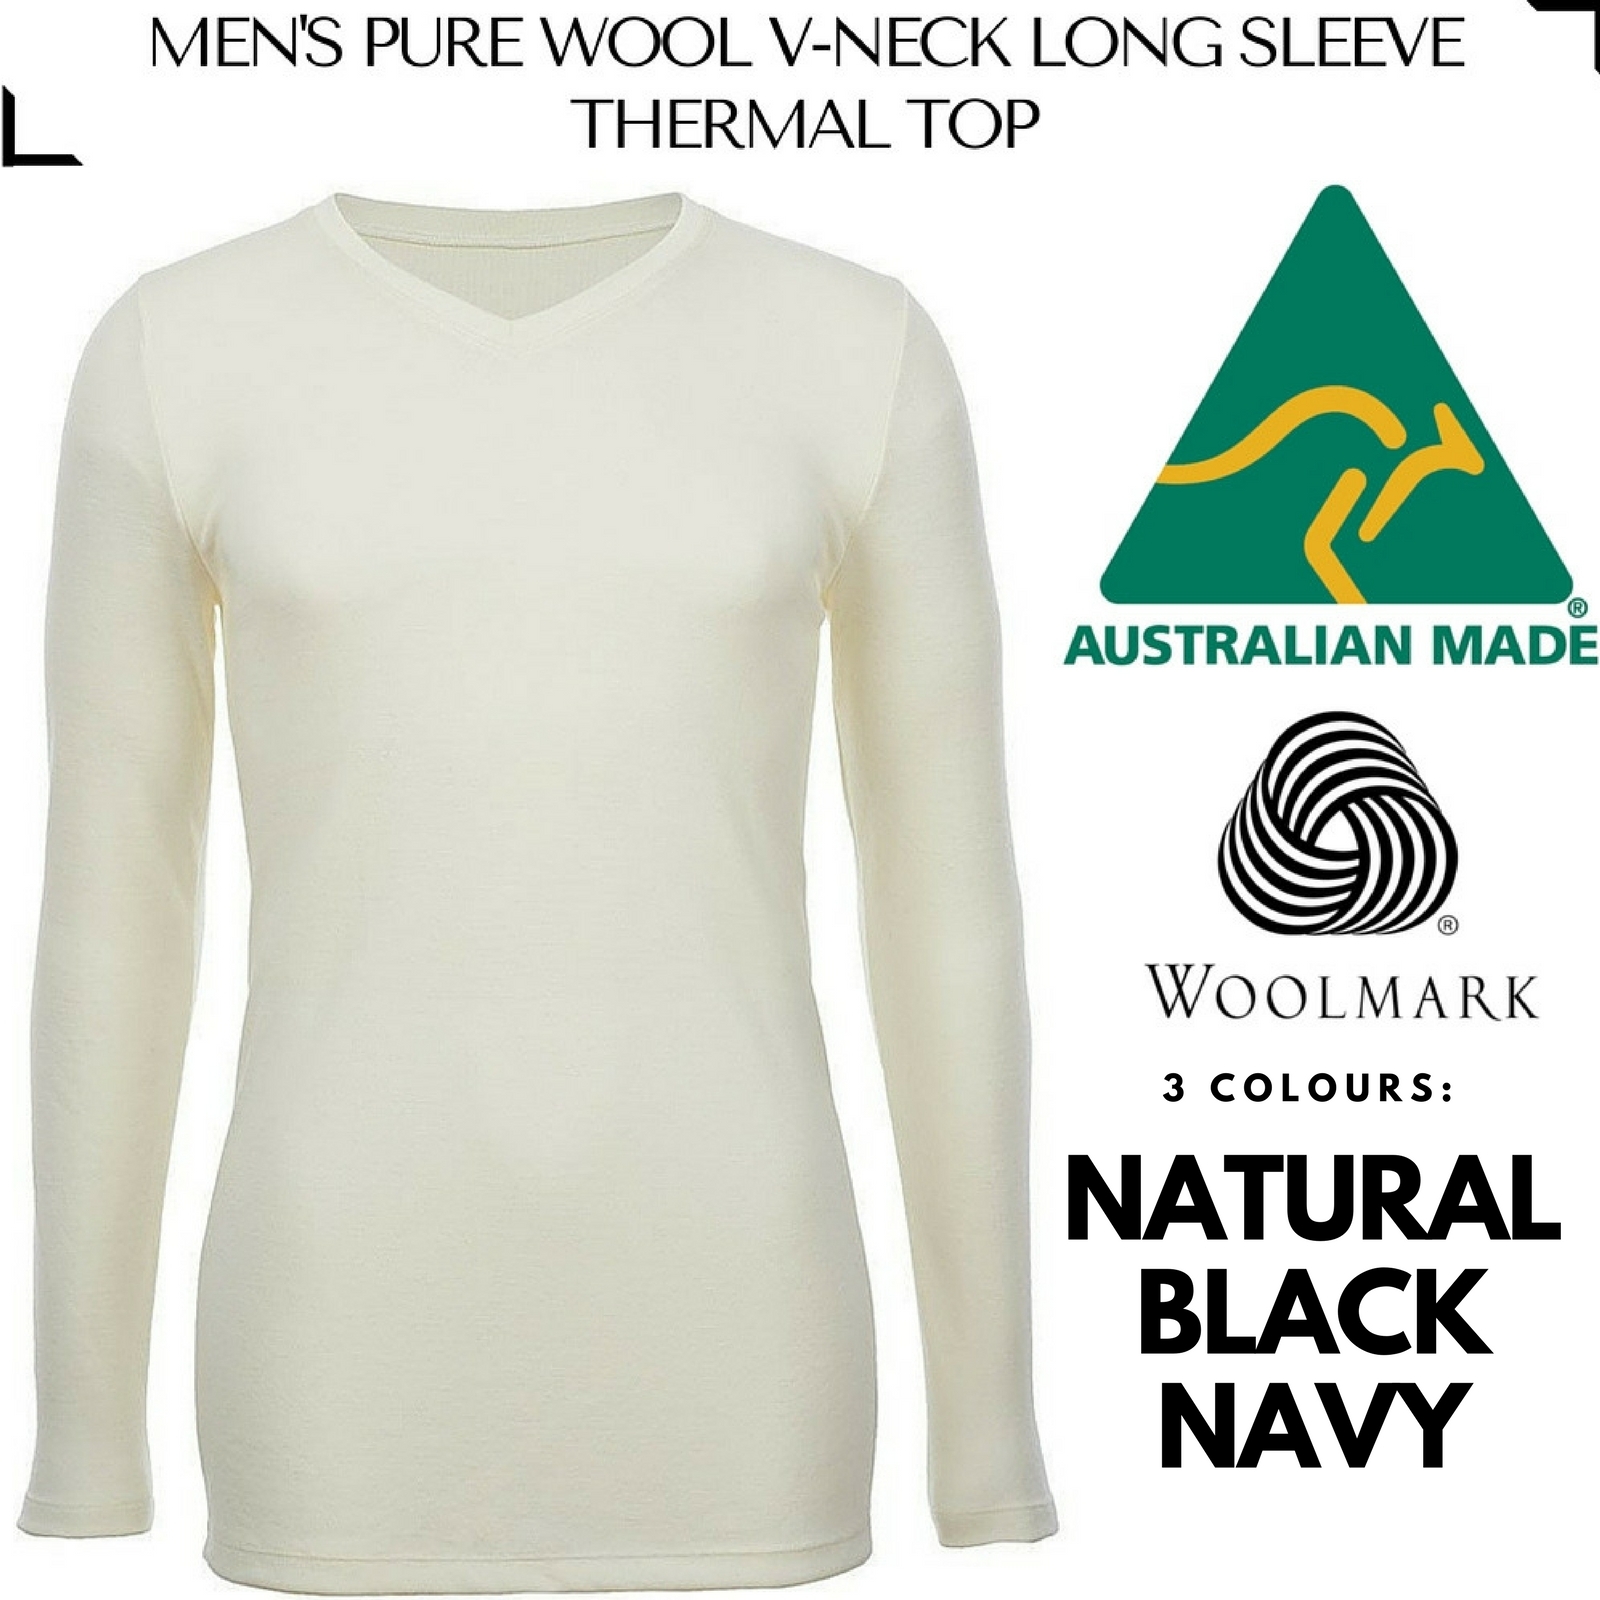 Men's 100% Pure Merino Wool V-Neck Long Sleeve Top T Shirt Thermal